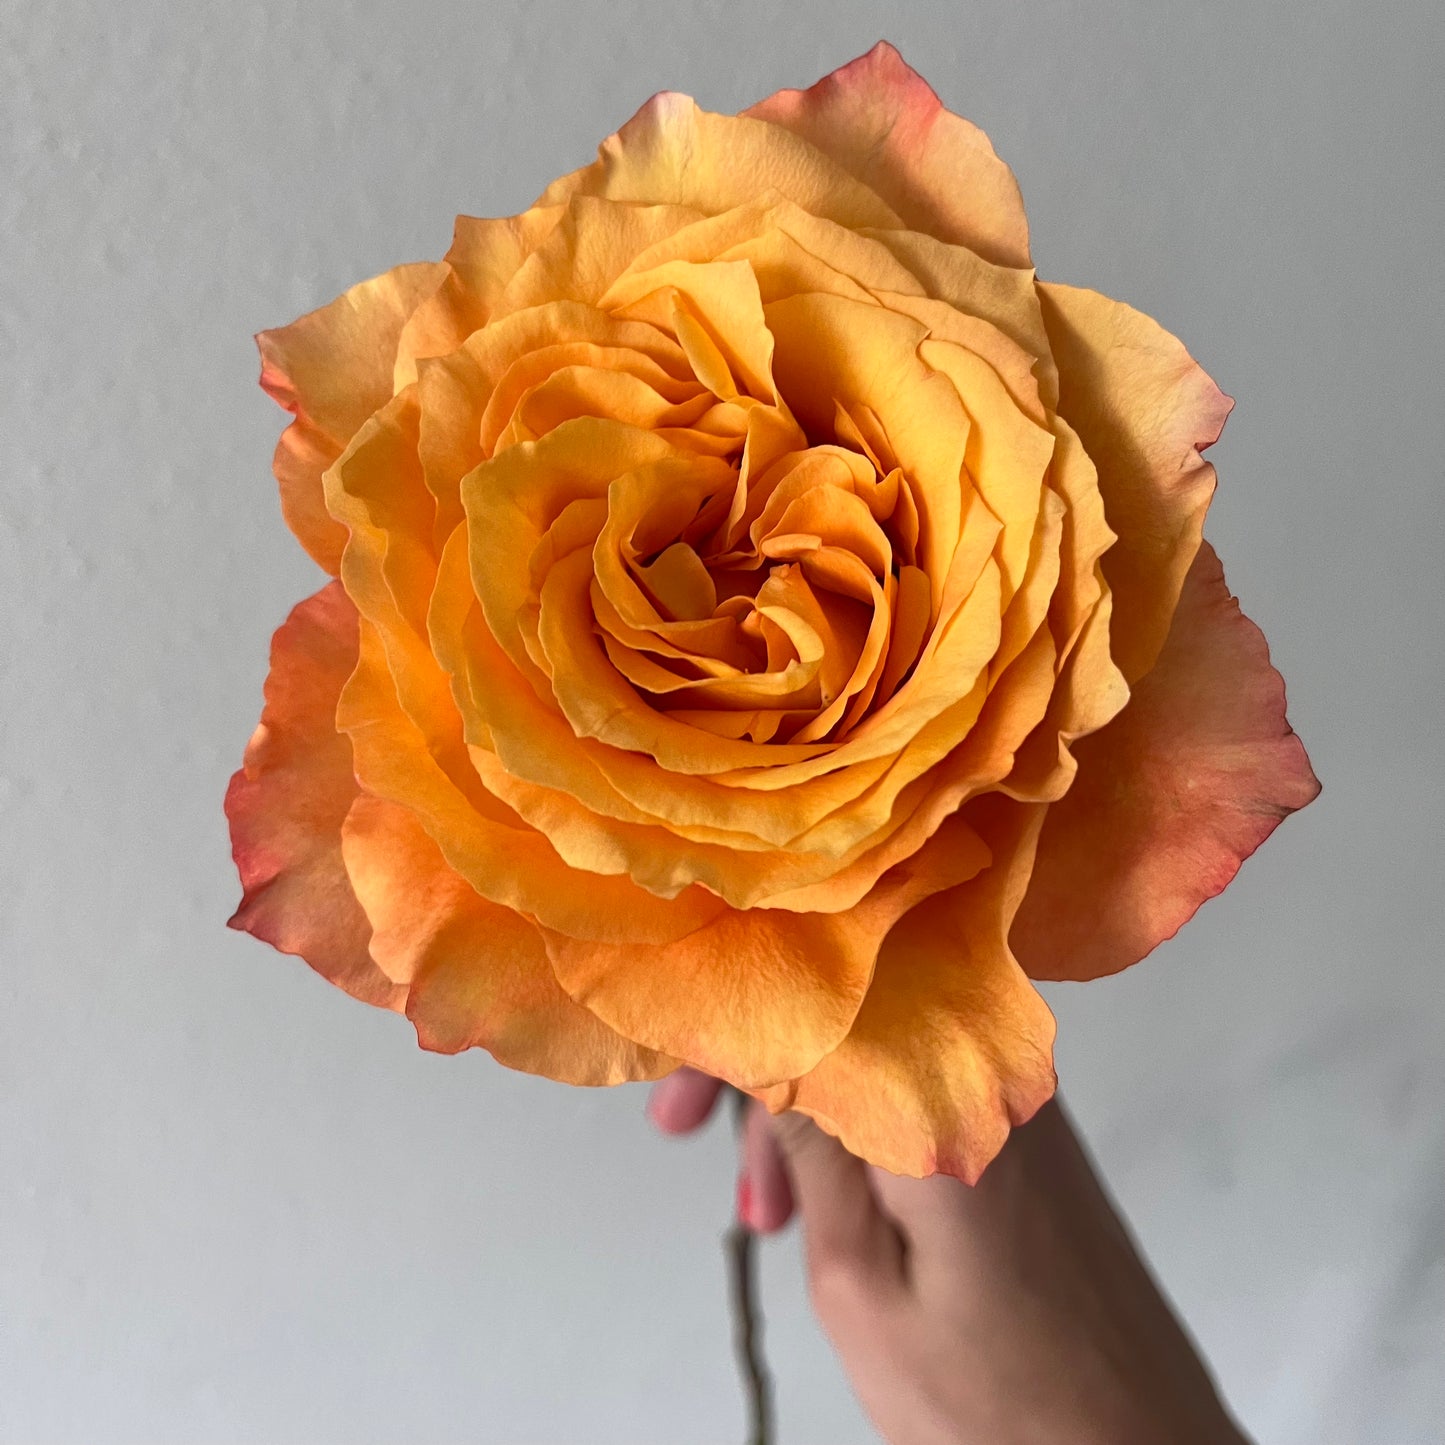 Two Dozen Premium Orange Roses in a Modern Vase